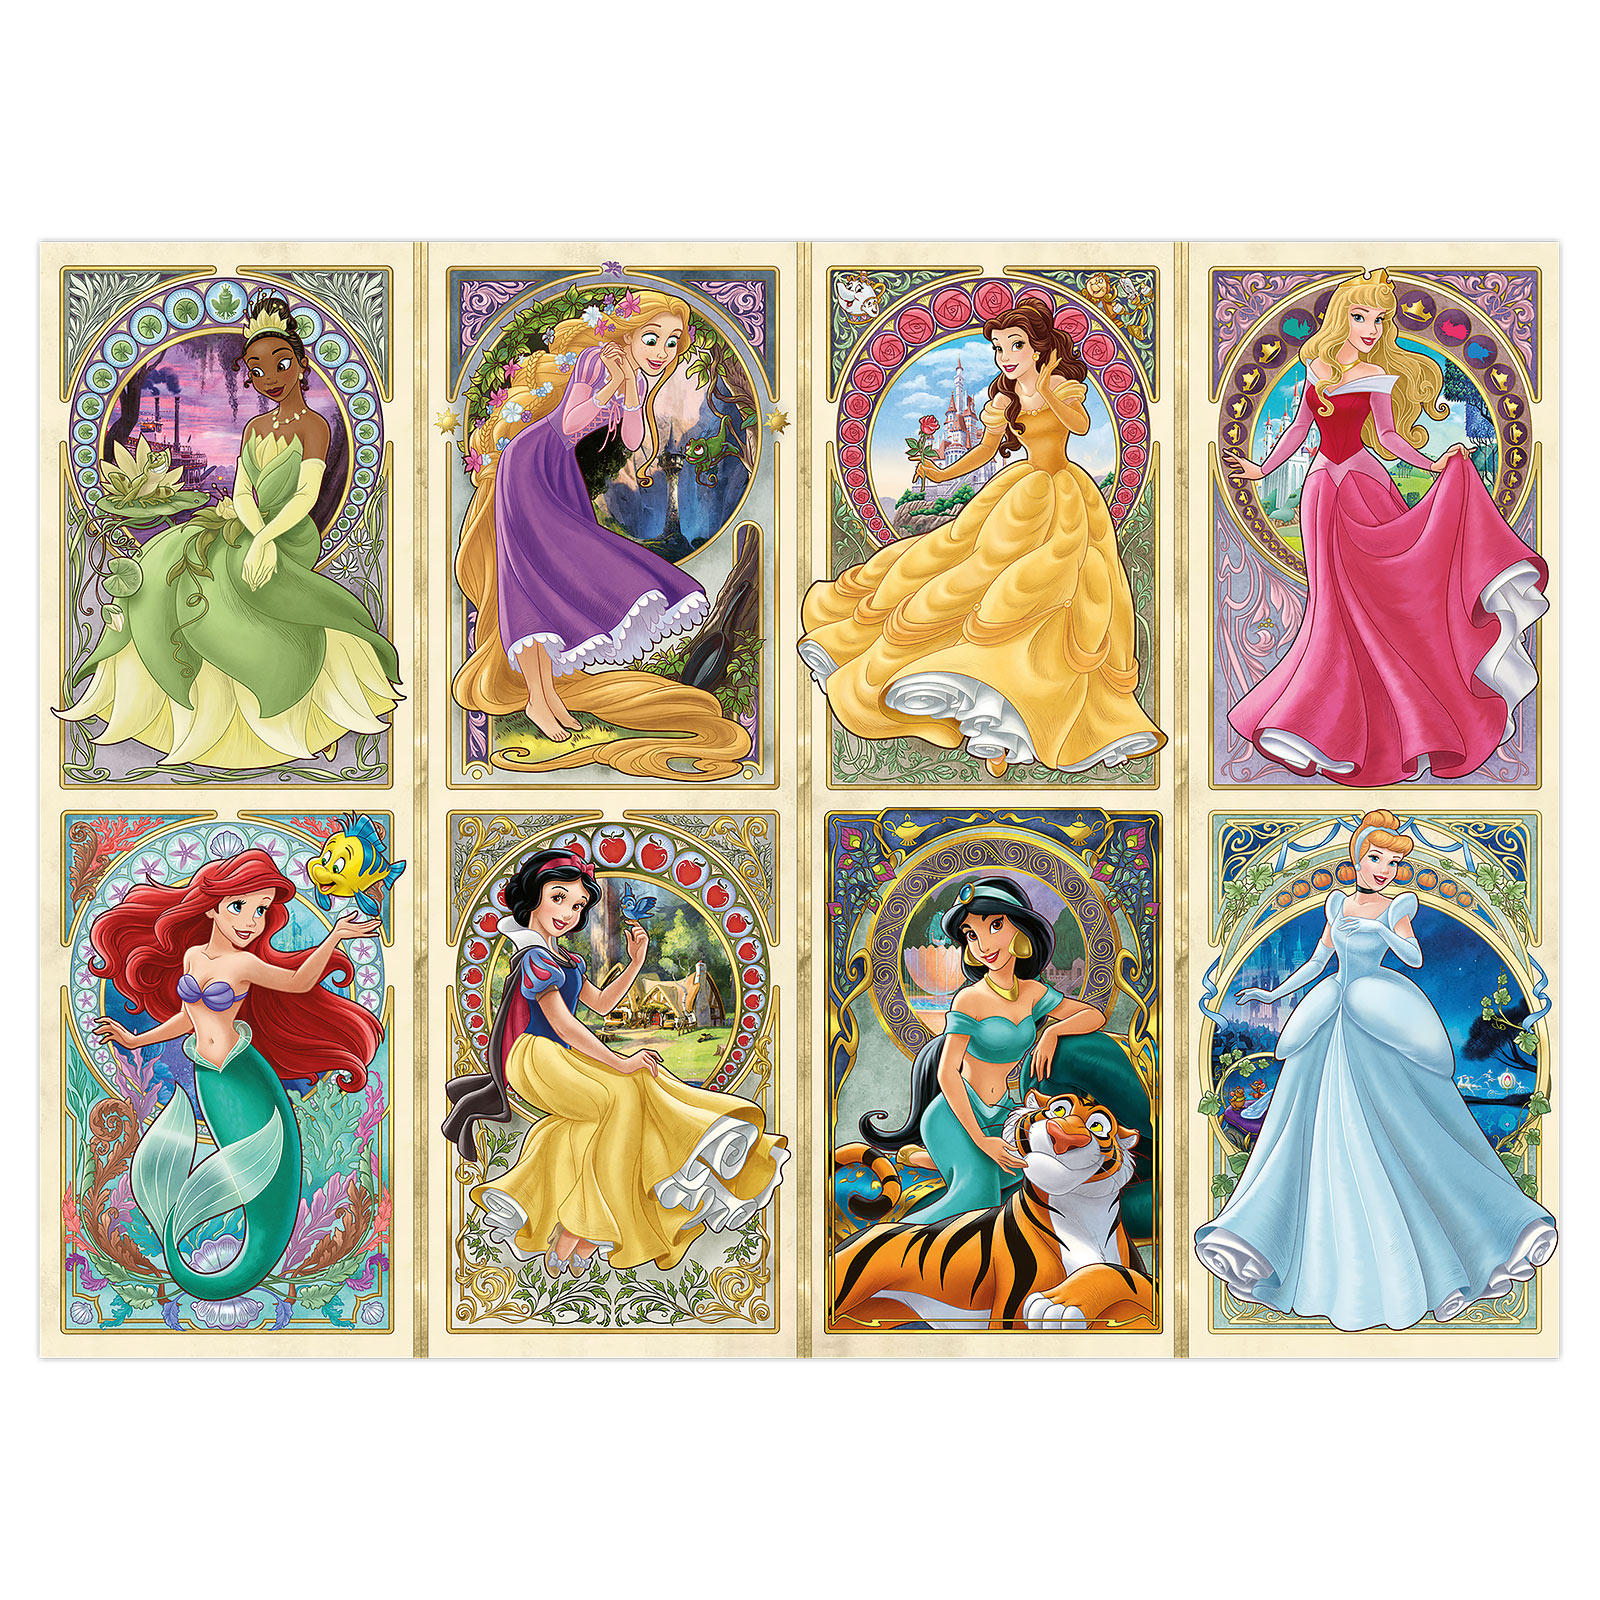 Disney Princess Puzzle 1000 Teile